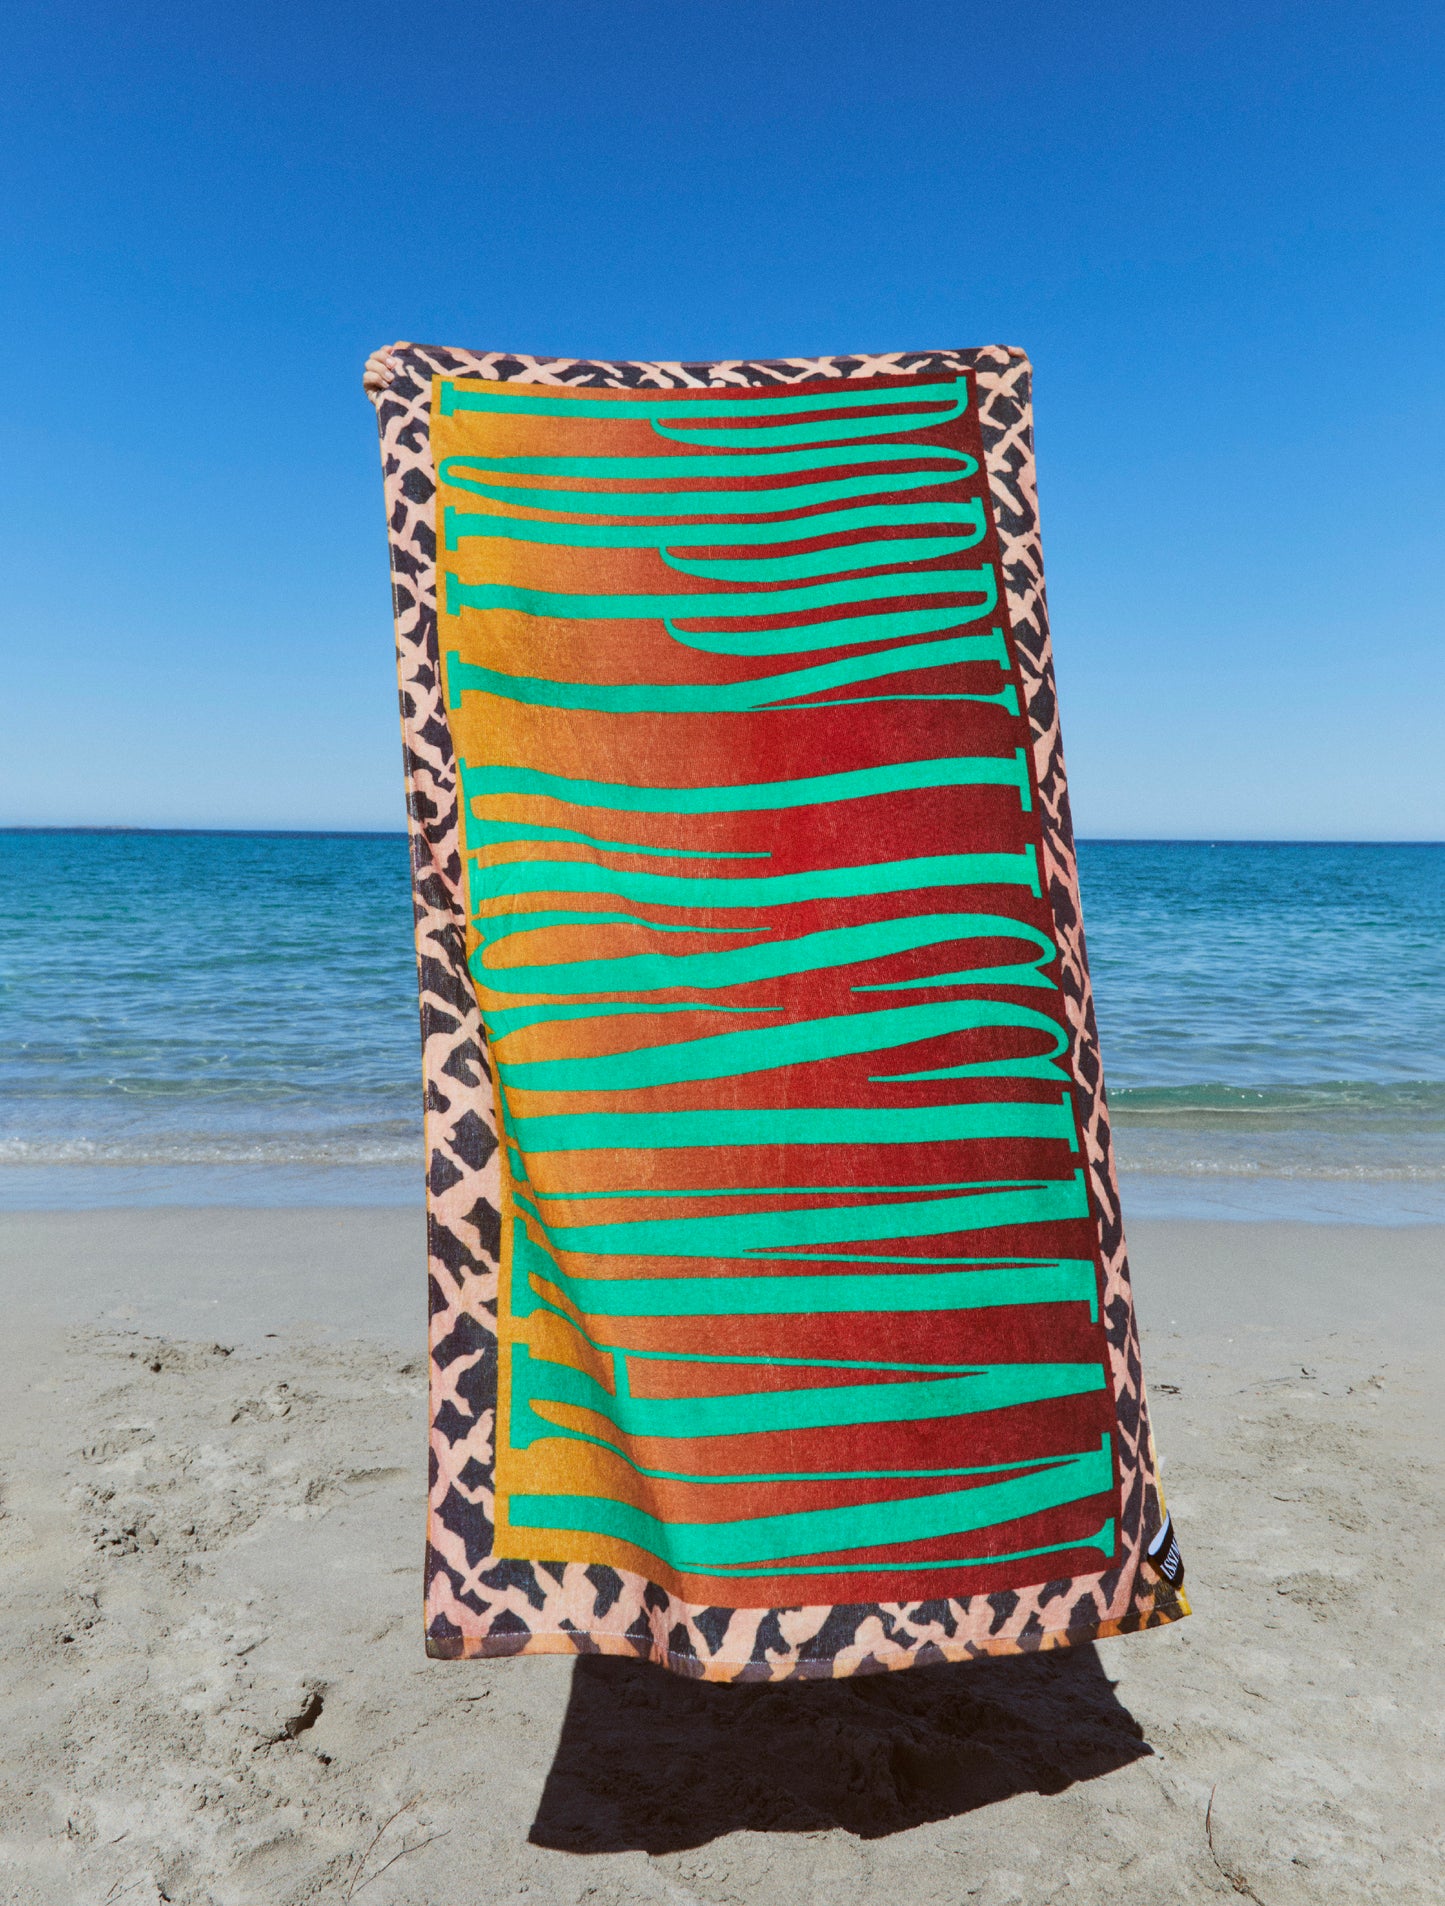 Sunset Velour Towel